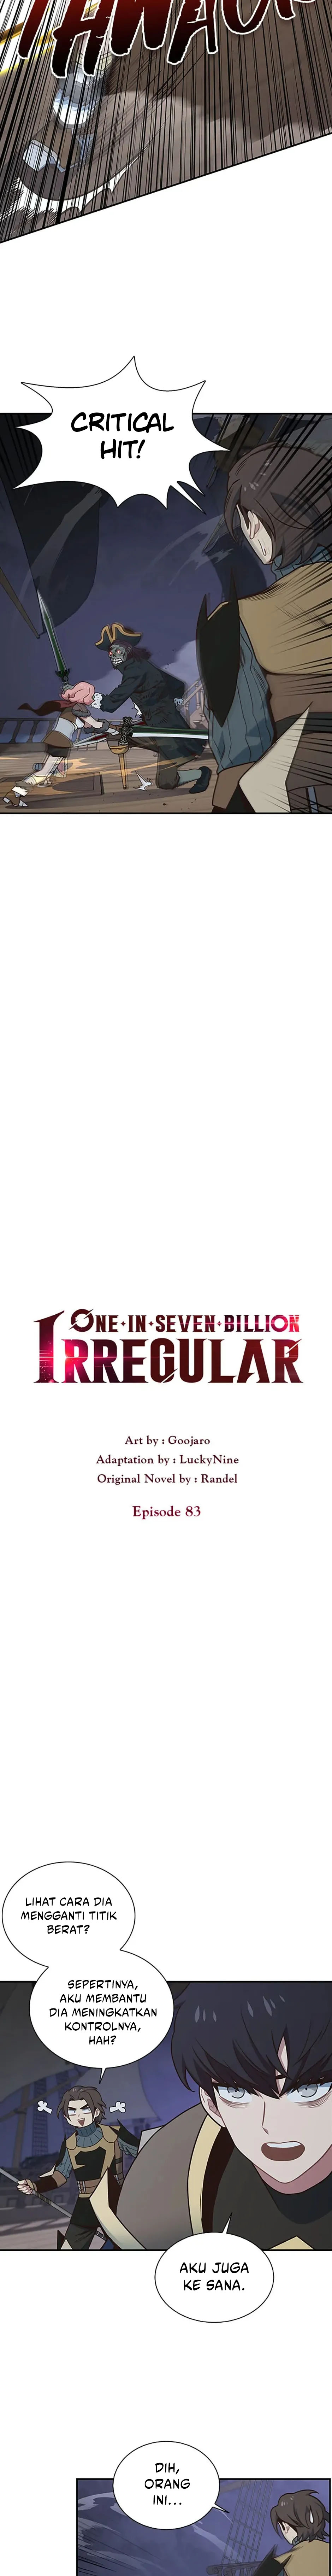 Irregular Of 1 In 7 Billion (One in Seven Billion Irregular) Chapter 83